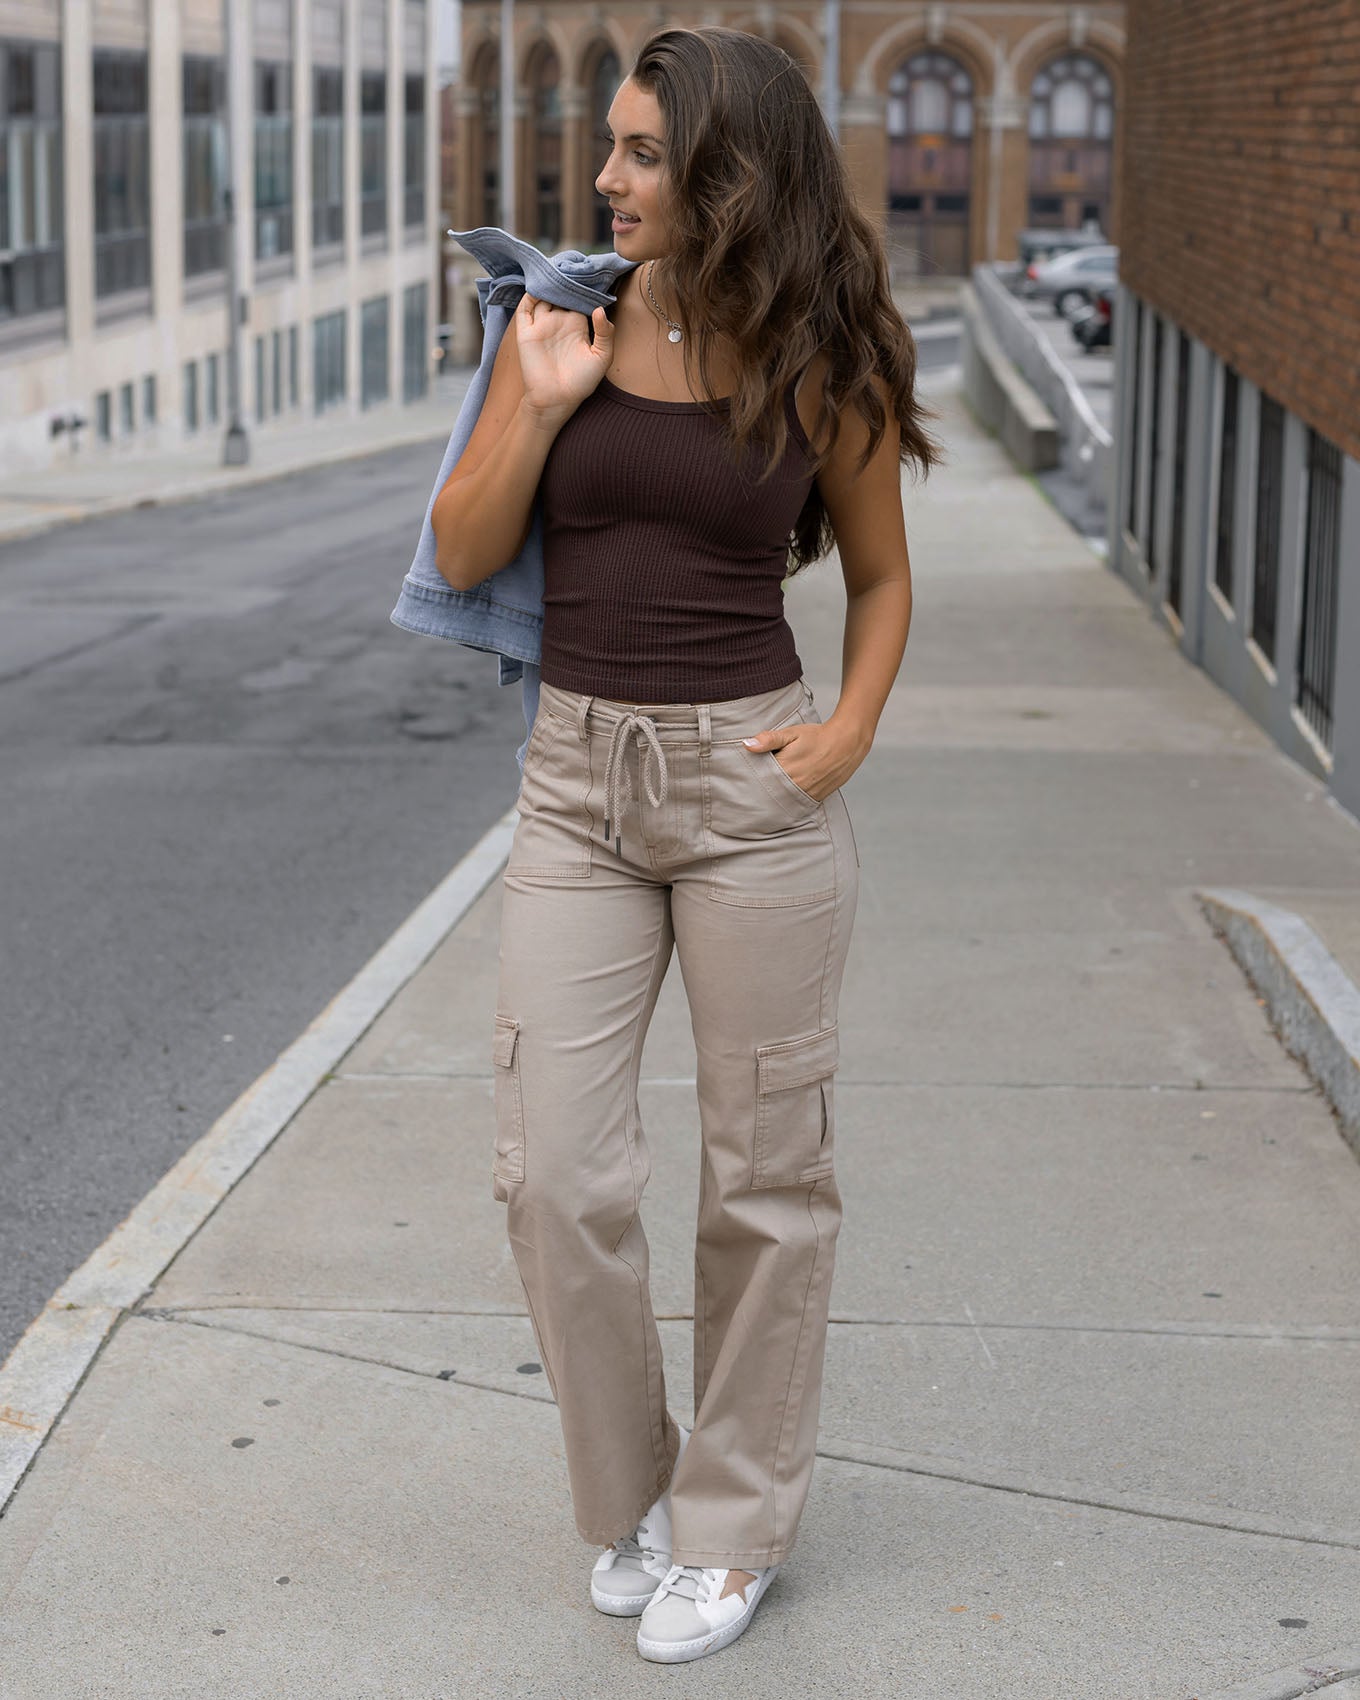 Top 20 Slim Fit Cargo Pants Women's Ideas 3 